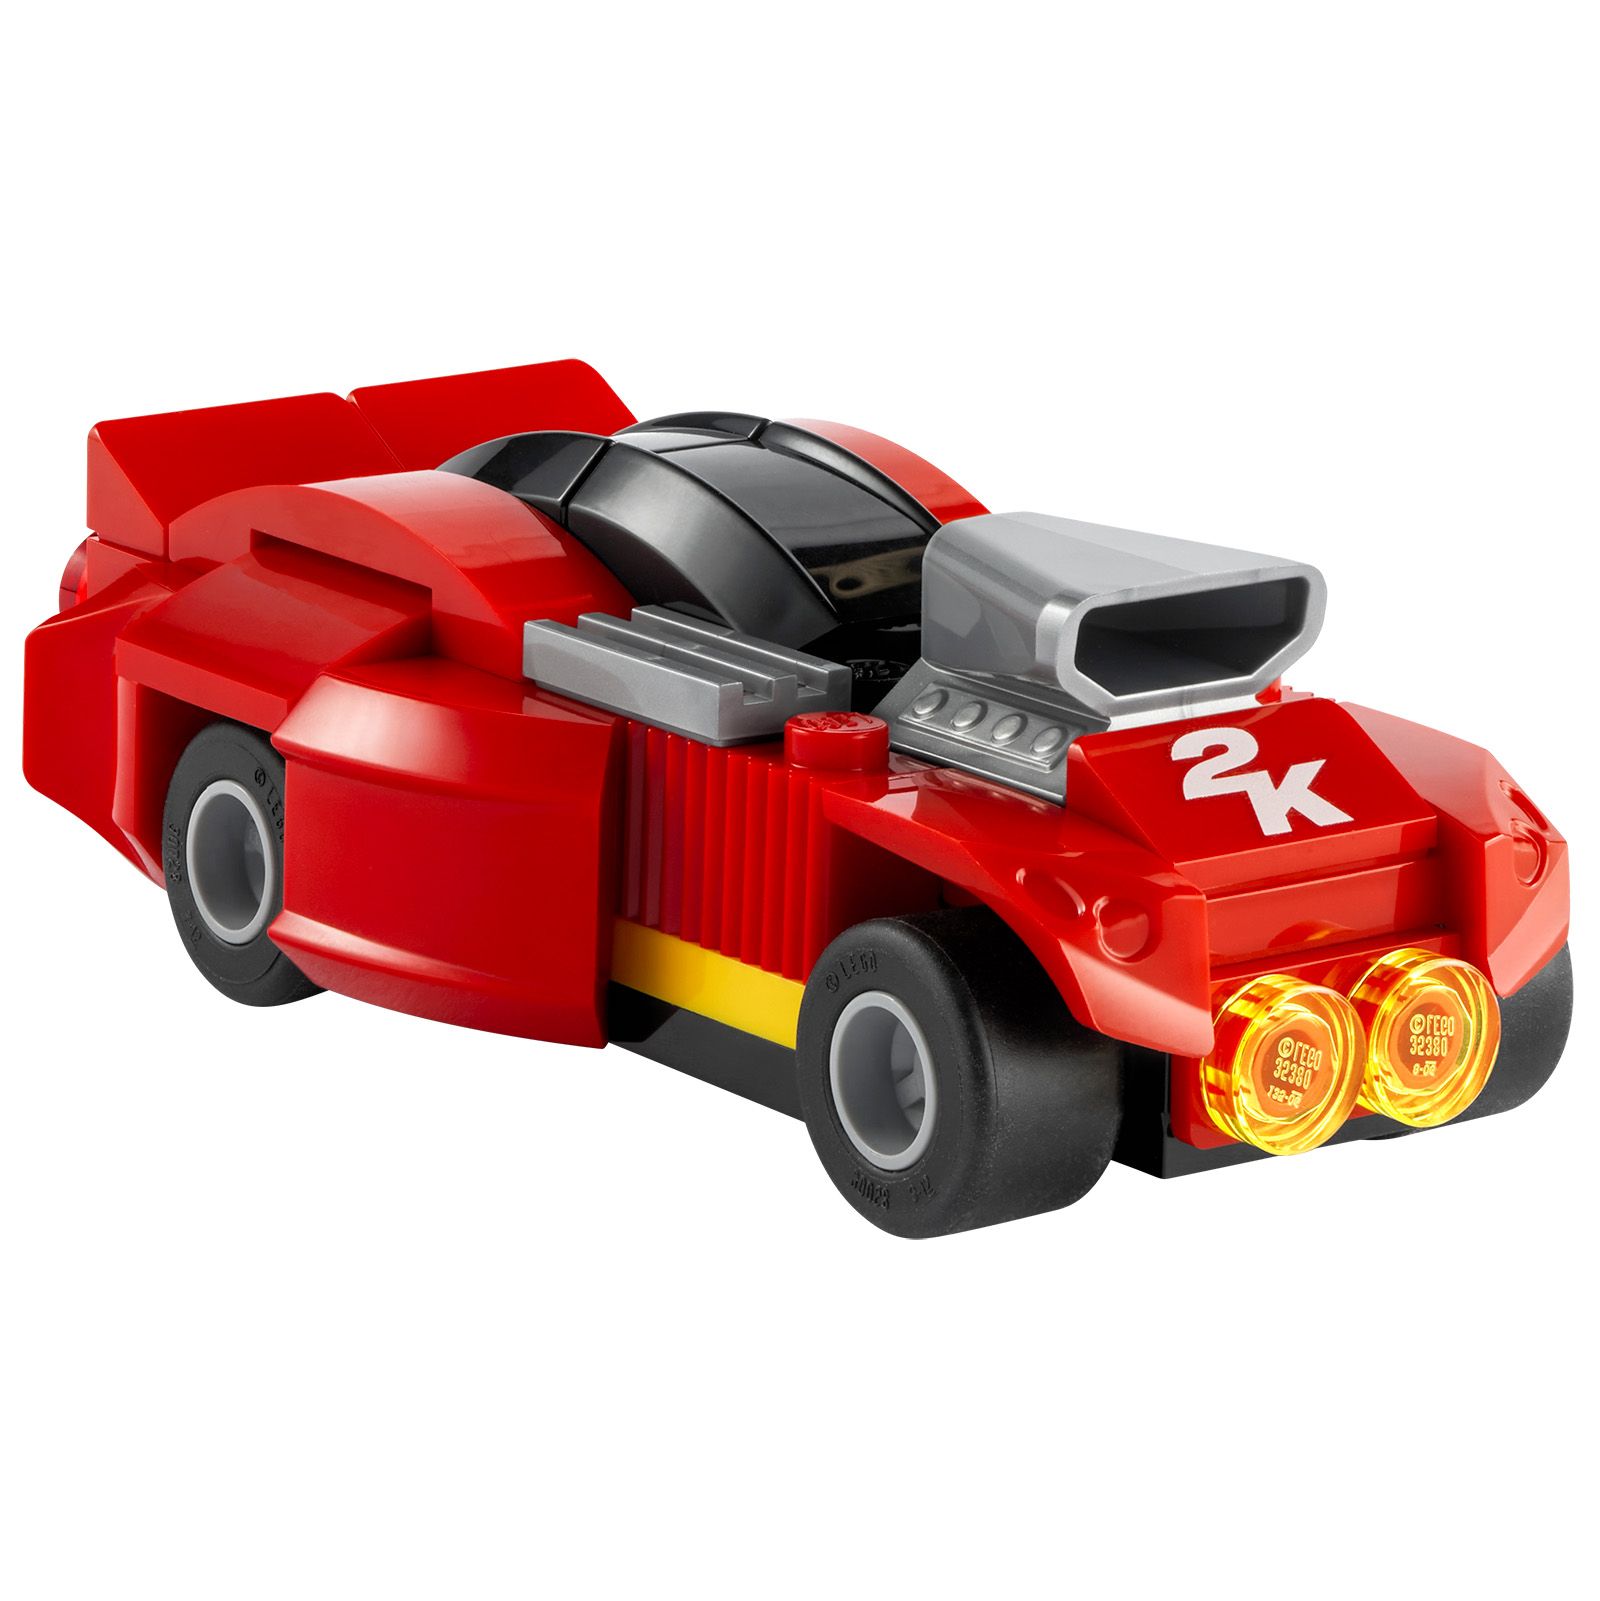 LEGO 2K Drive: თრეილერი და LEGO პროდუქტი, რომელიც შემოთავაზებულია ვიდეო თამაშის გარკვეული ფიზიკური ვერსიებით